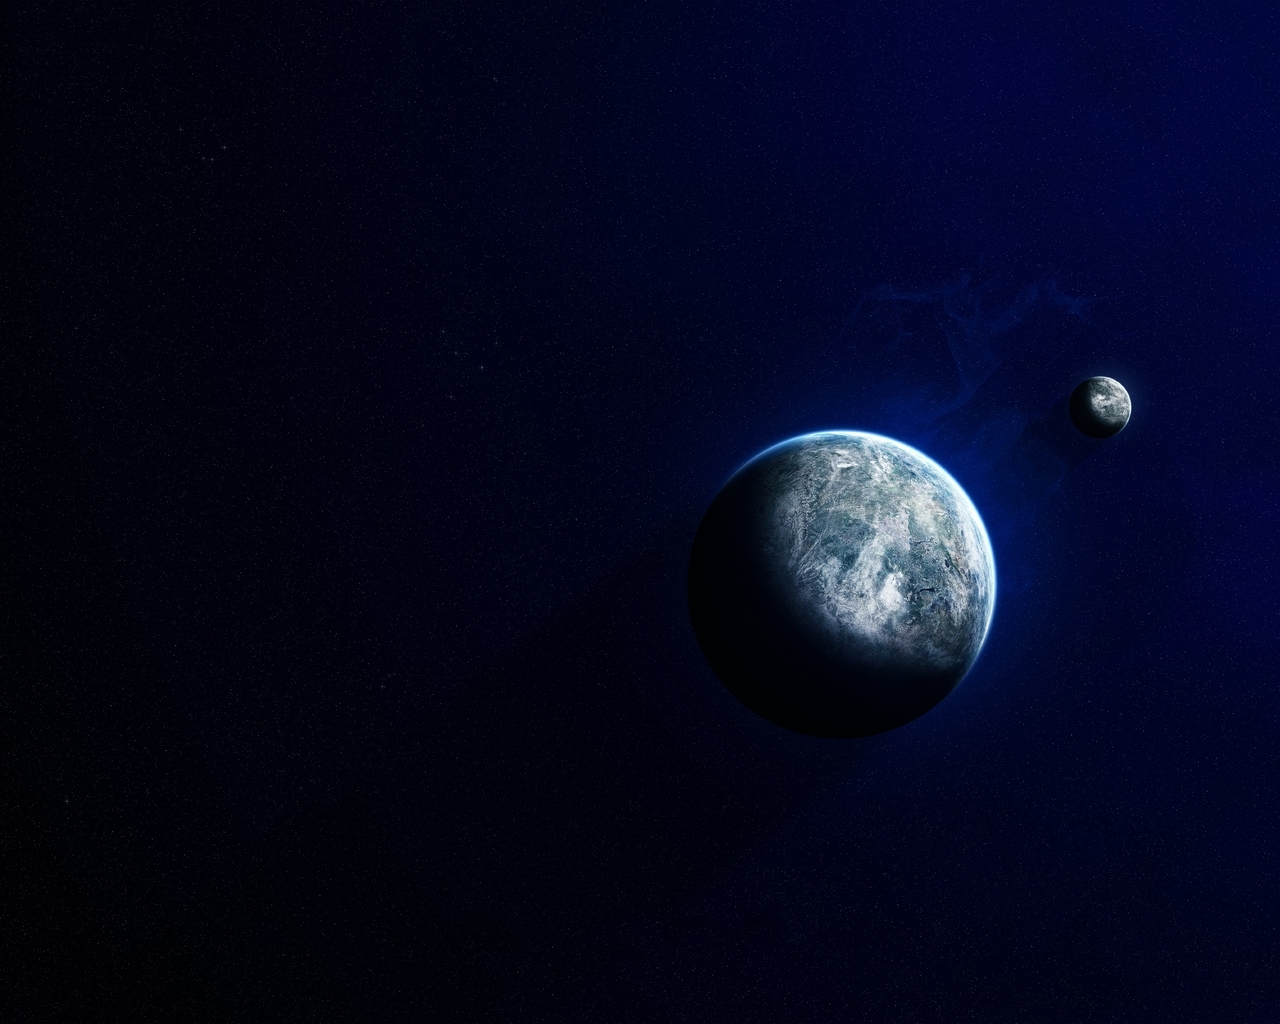 Image: Planet, satellite, light, space